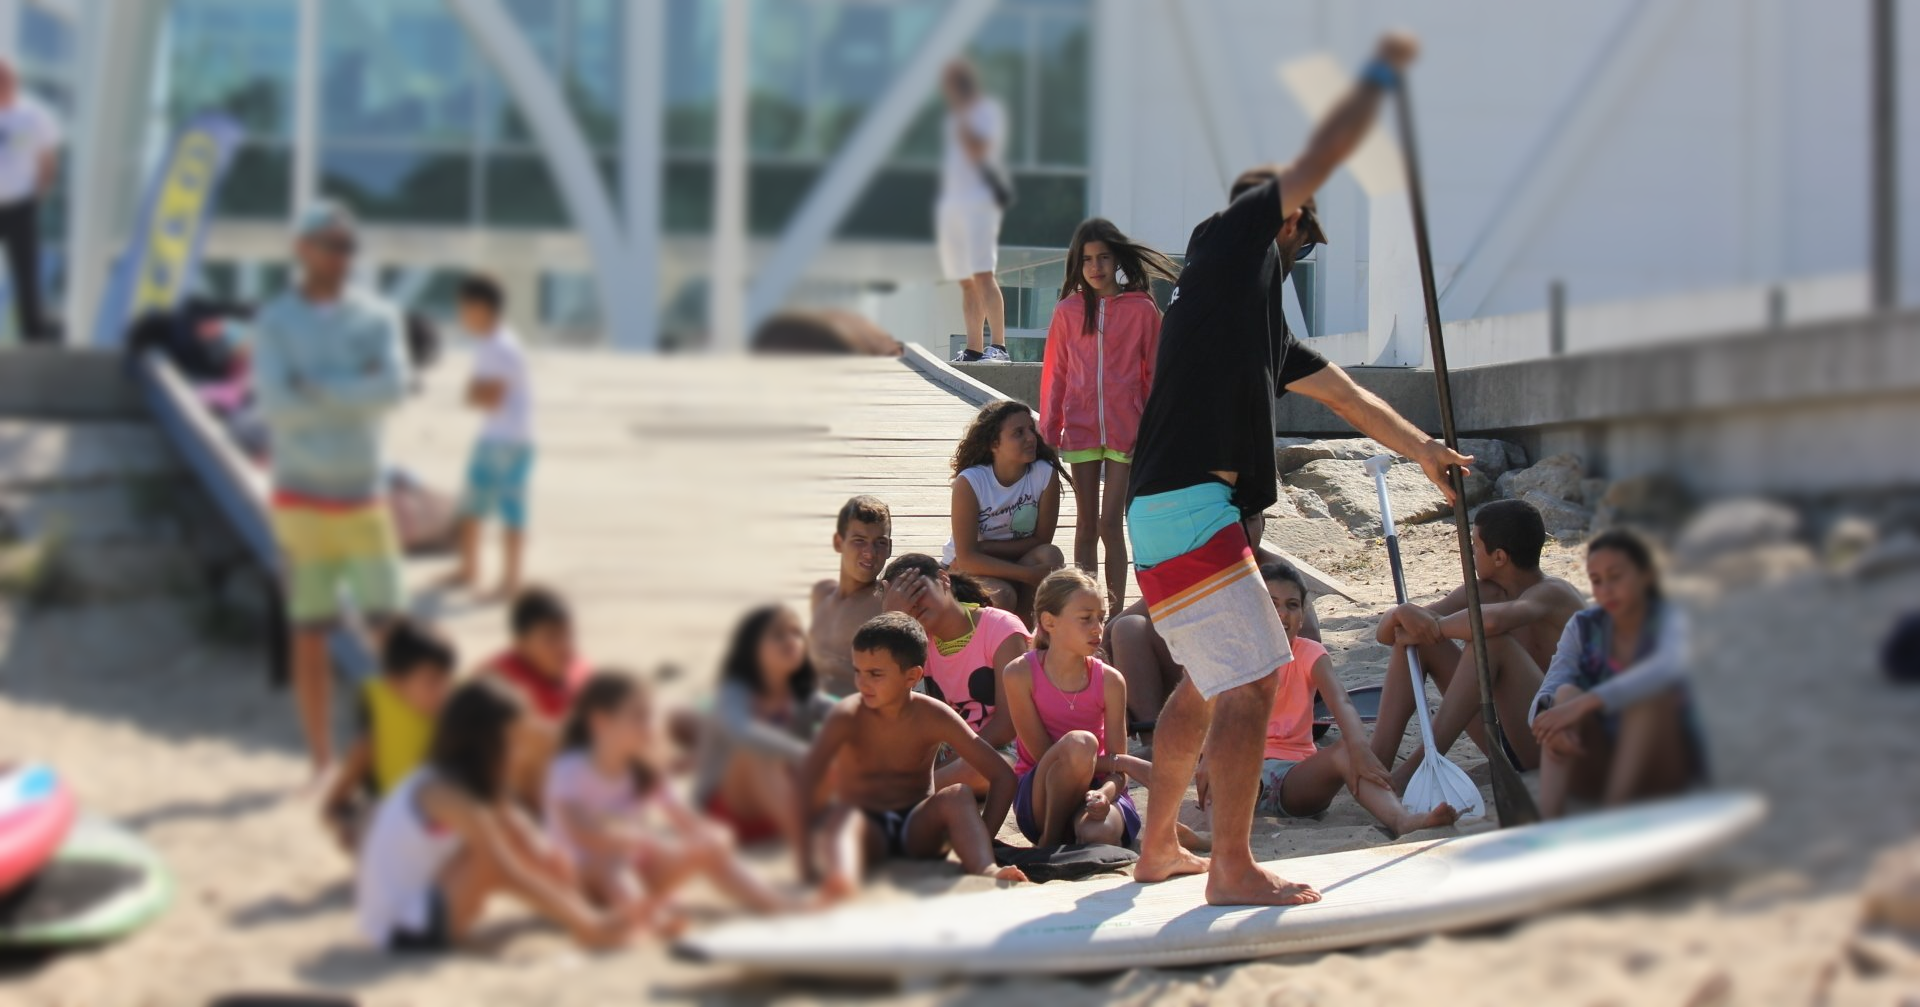 SURF LESSONS kids 7  Years surf para criancas apartir 7 anos